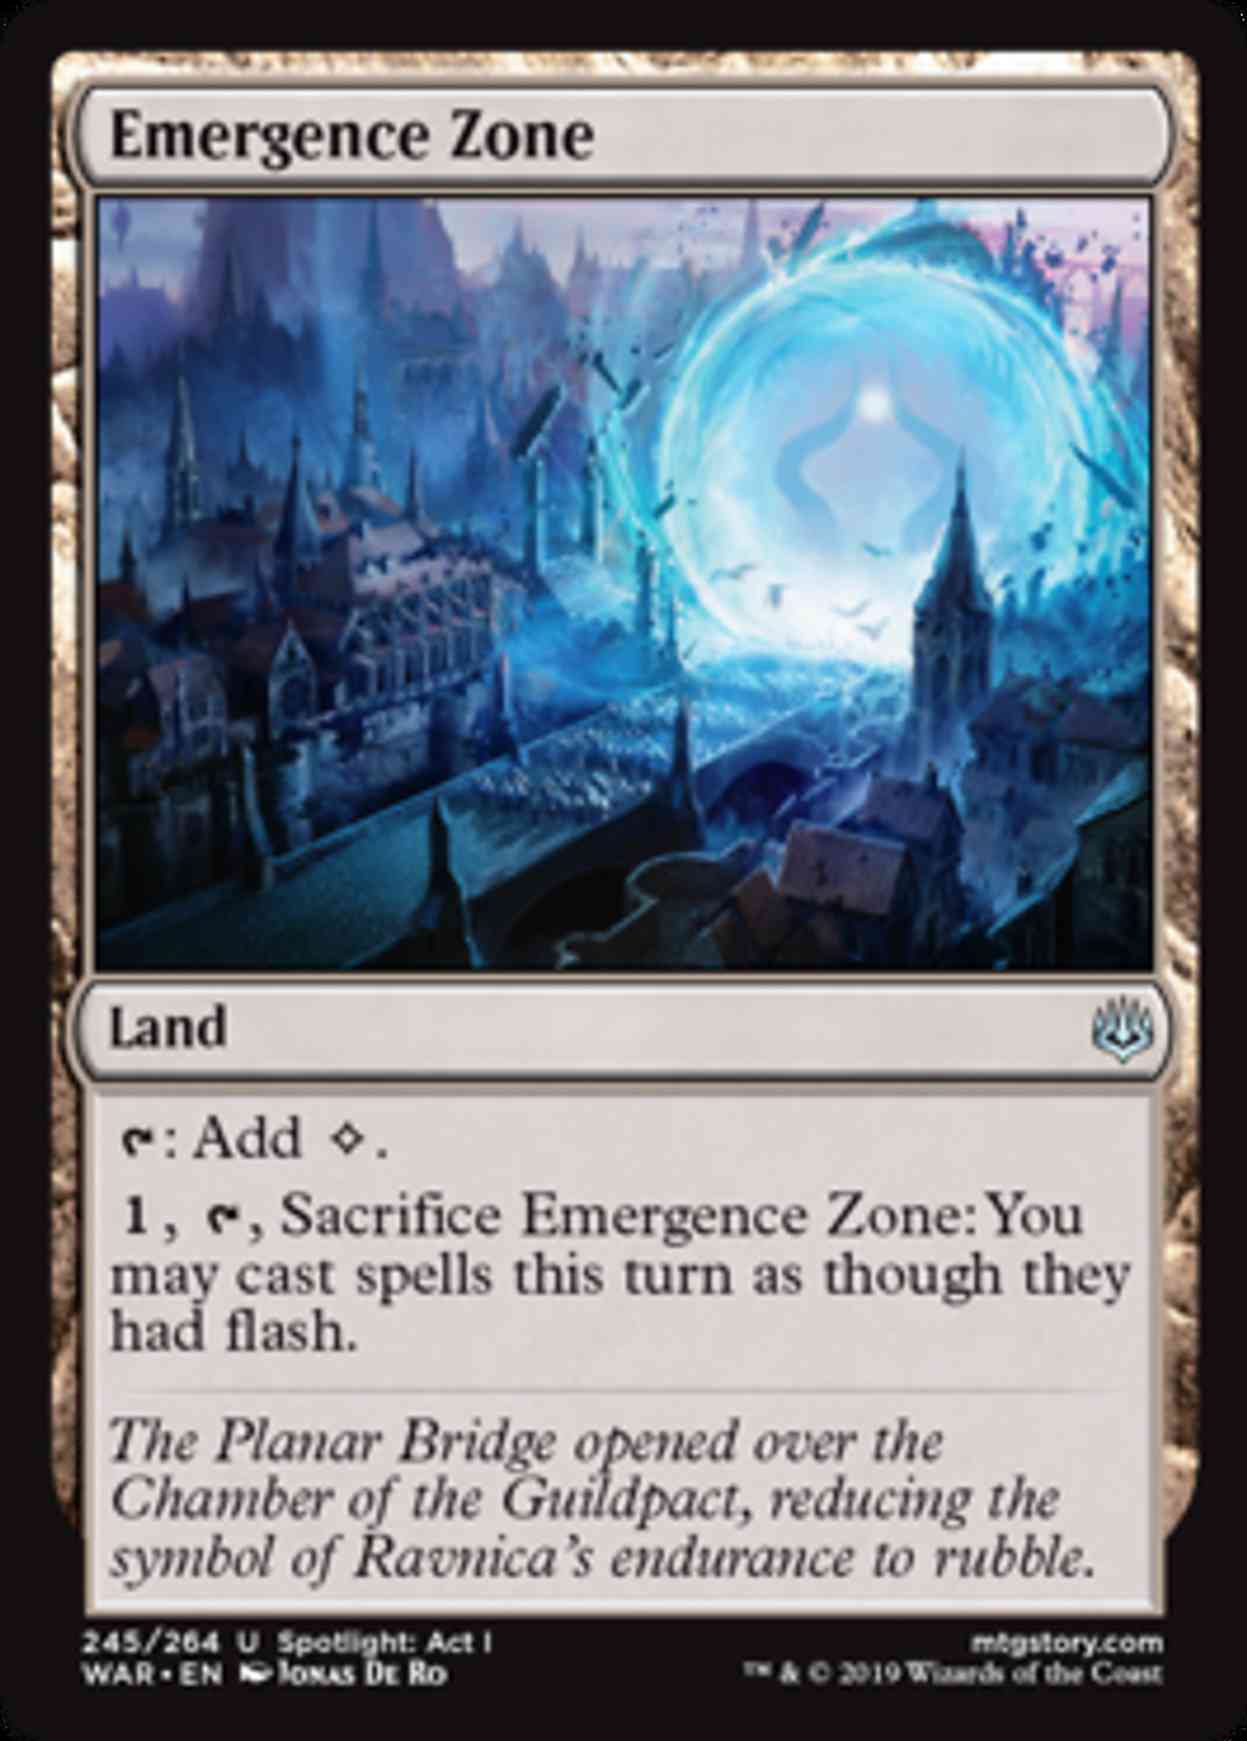 Emergence Zone magic card front